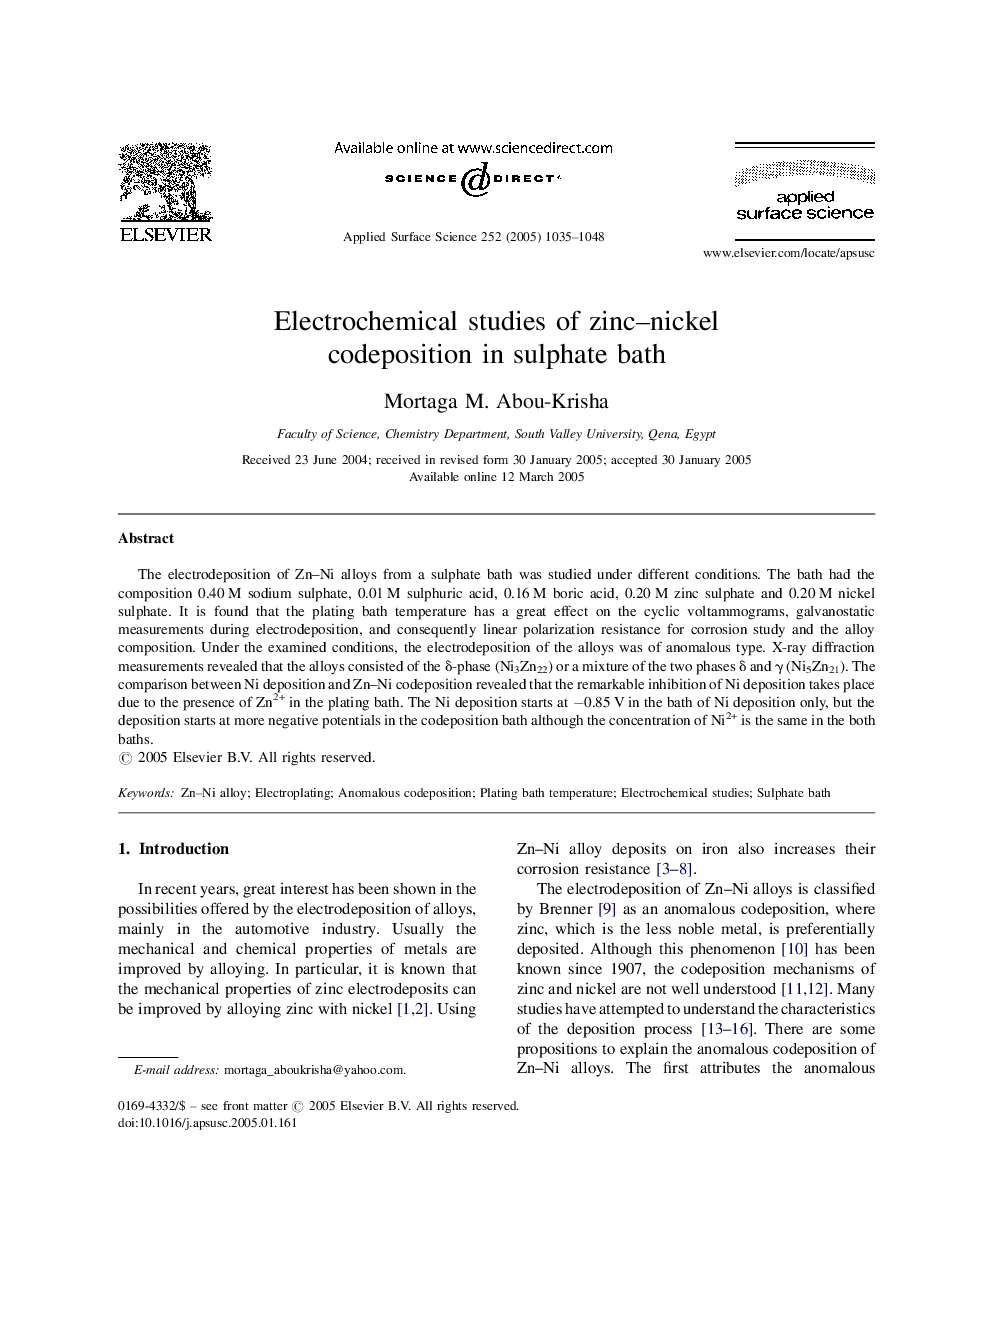 Electrochemical studies of zinc-nickel codeposition in sulphate bath